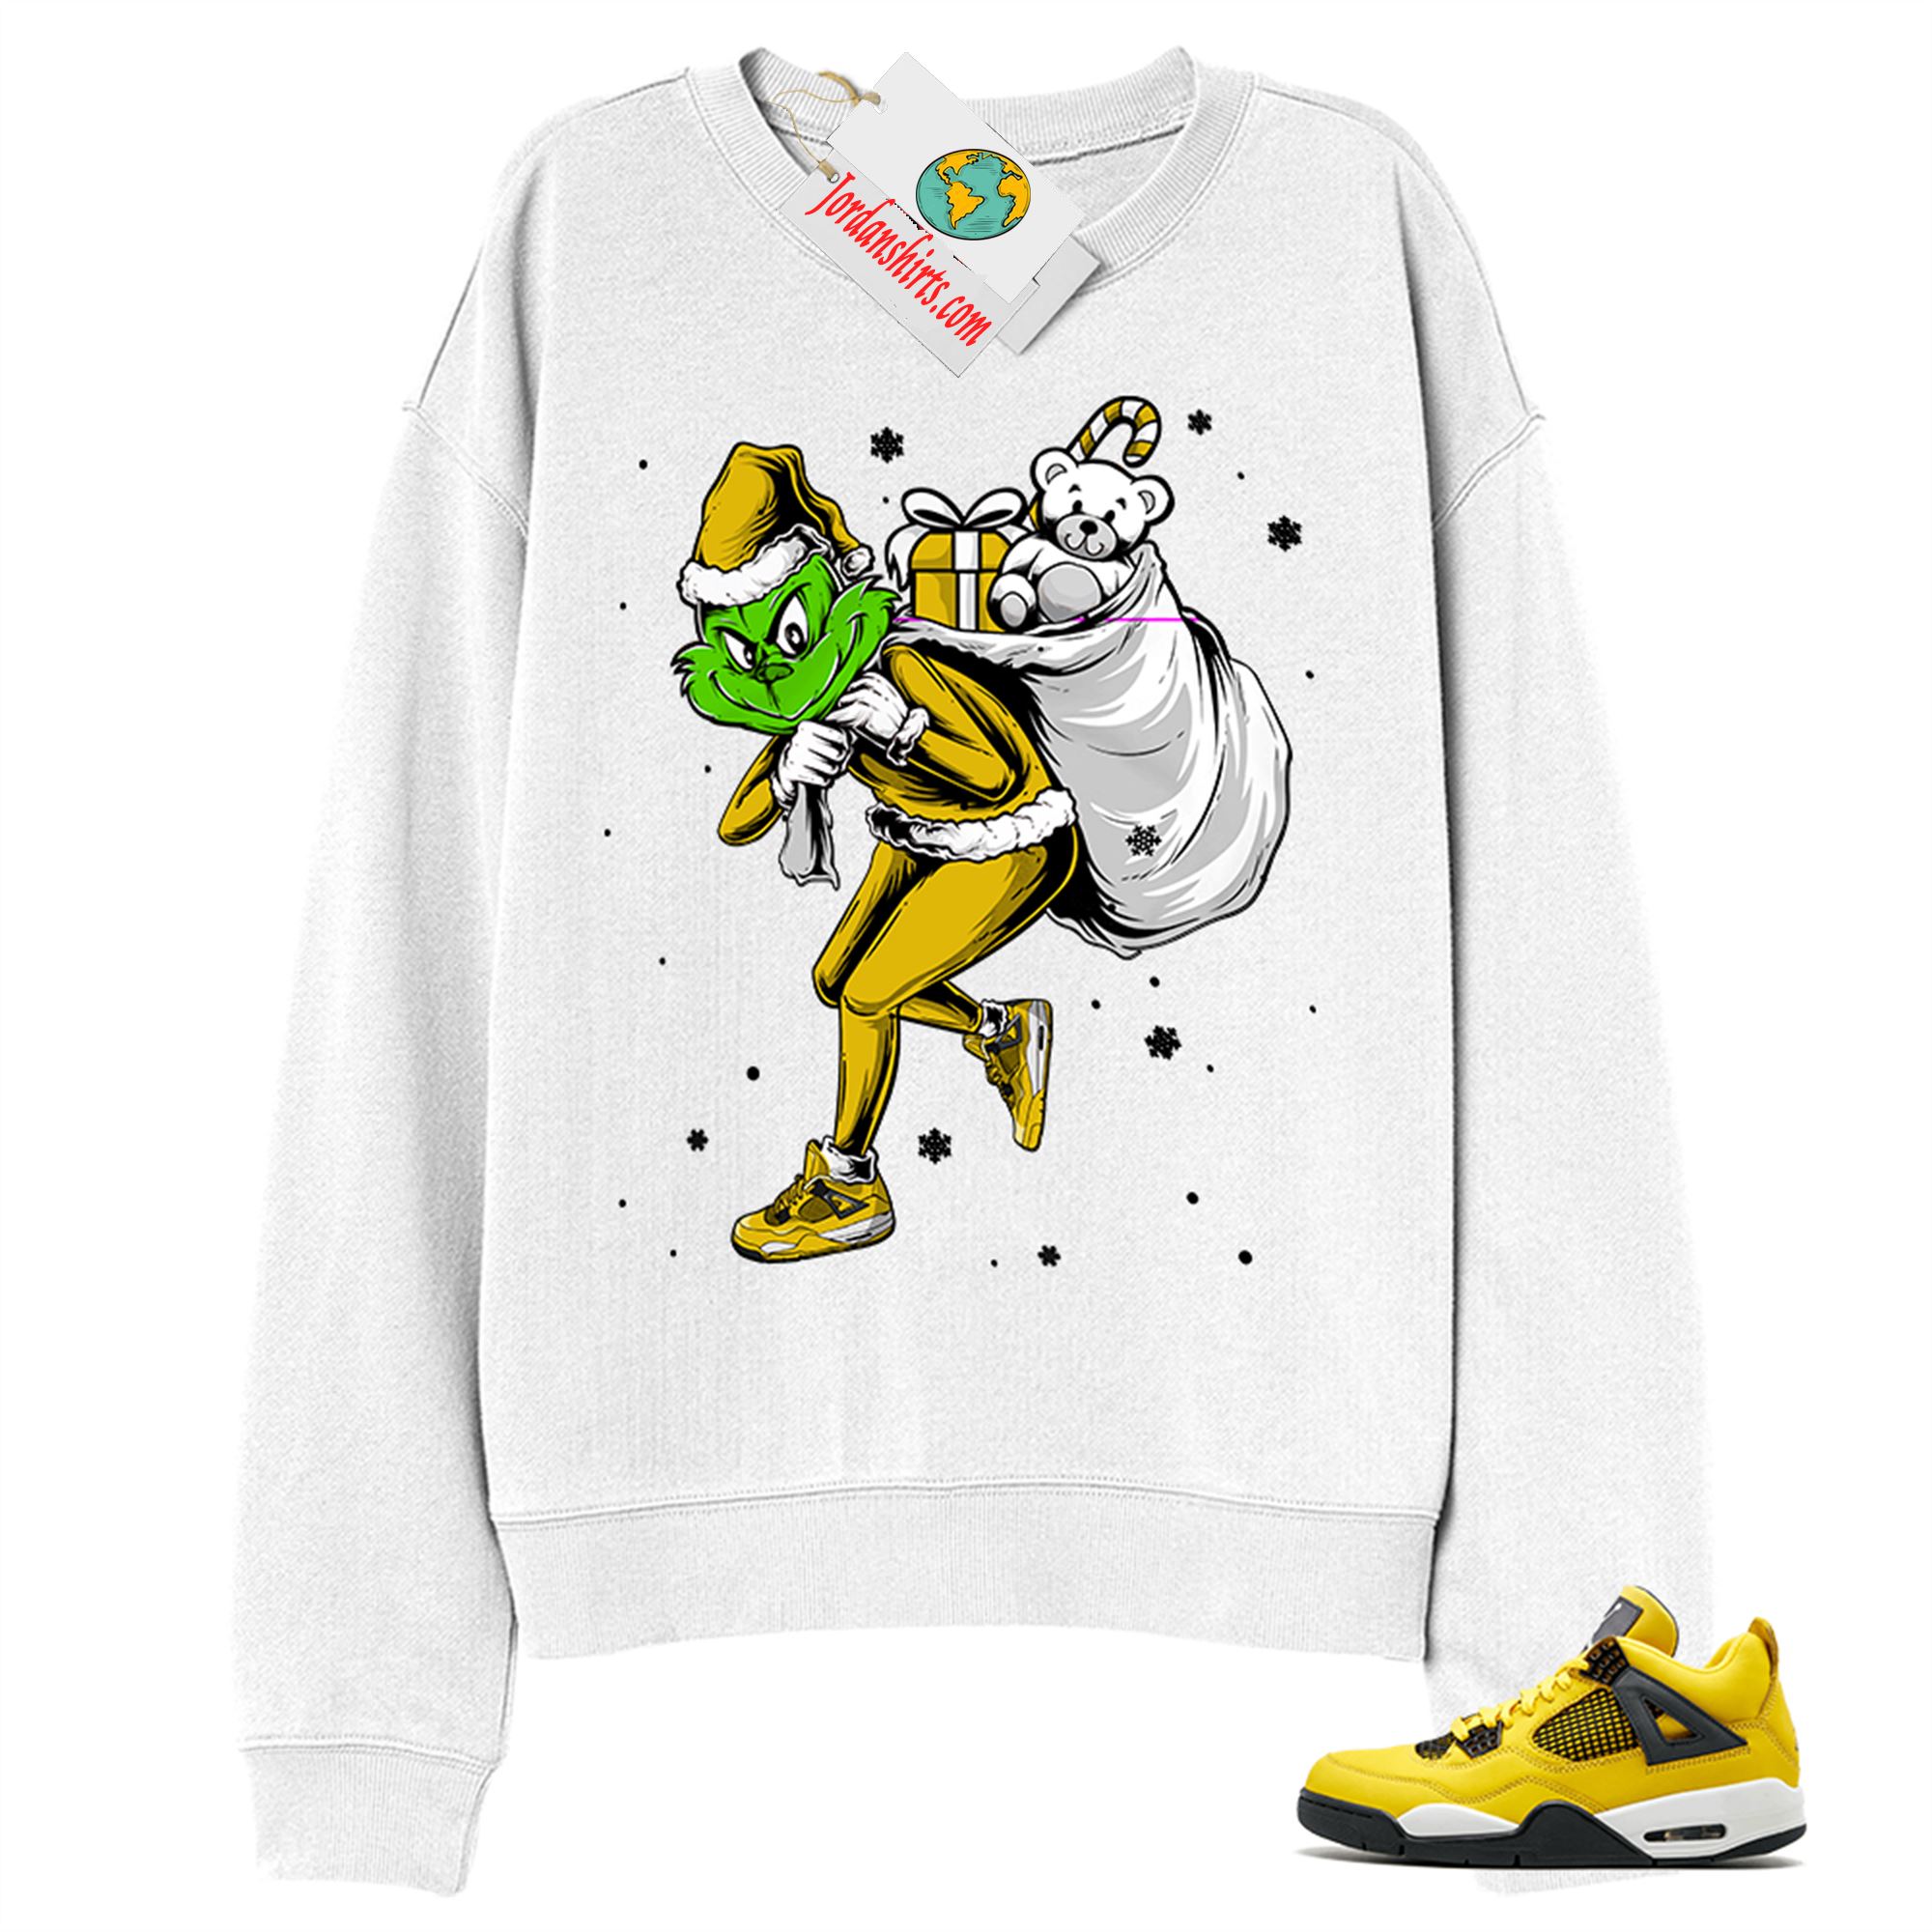 Jordan 4 Sweatshirt, Grinch Stolen Christmas White Sweatshirt Air Jordan 4 Tour Yellow Lightning 4s Full Size Up To 5xl